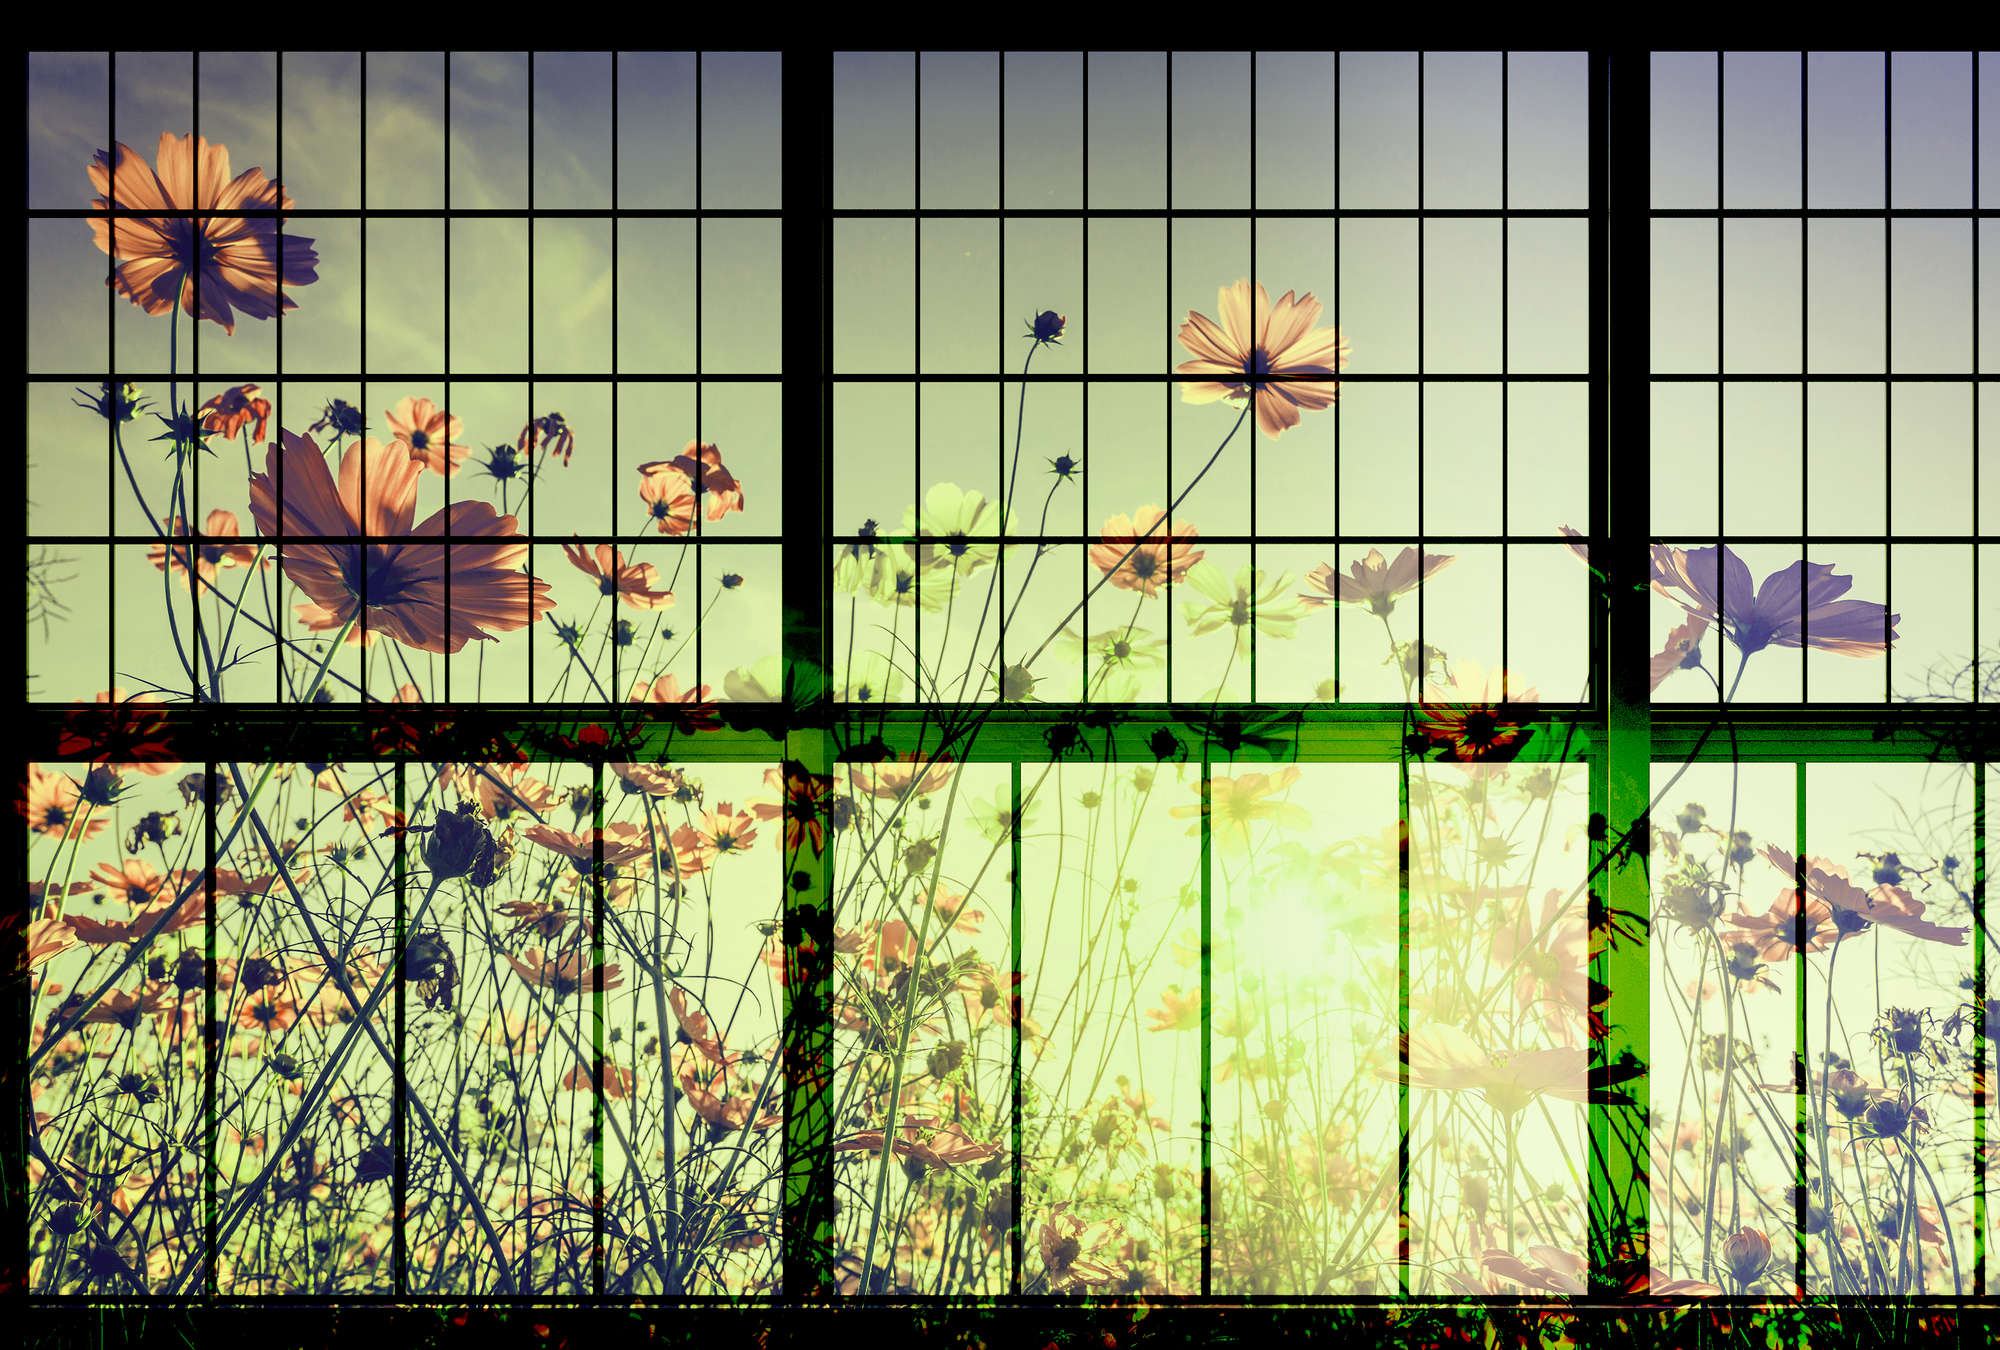             Meadow 2 - Carta da parati per finestre con fiore Meadow - Verde, rosa | Premium Smooth Fleece
        